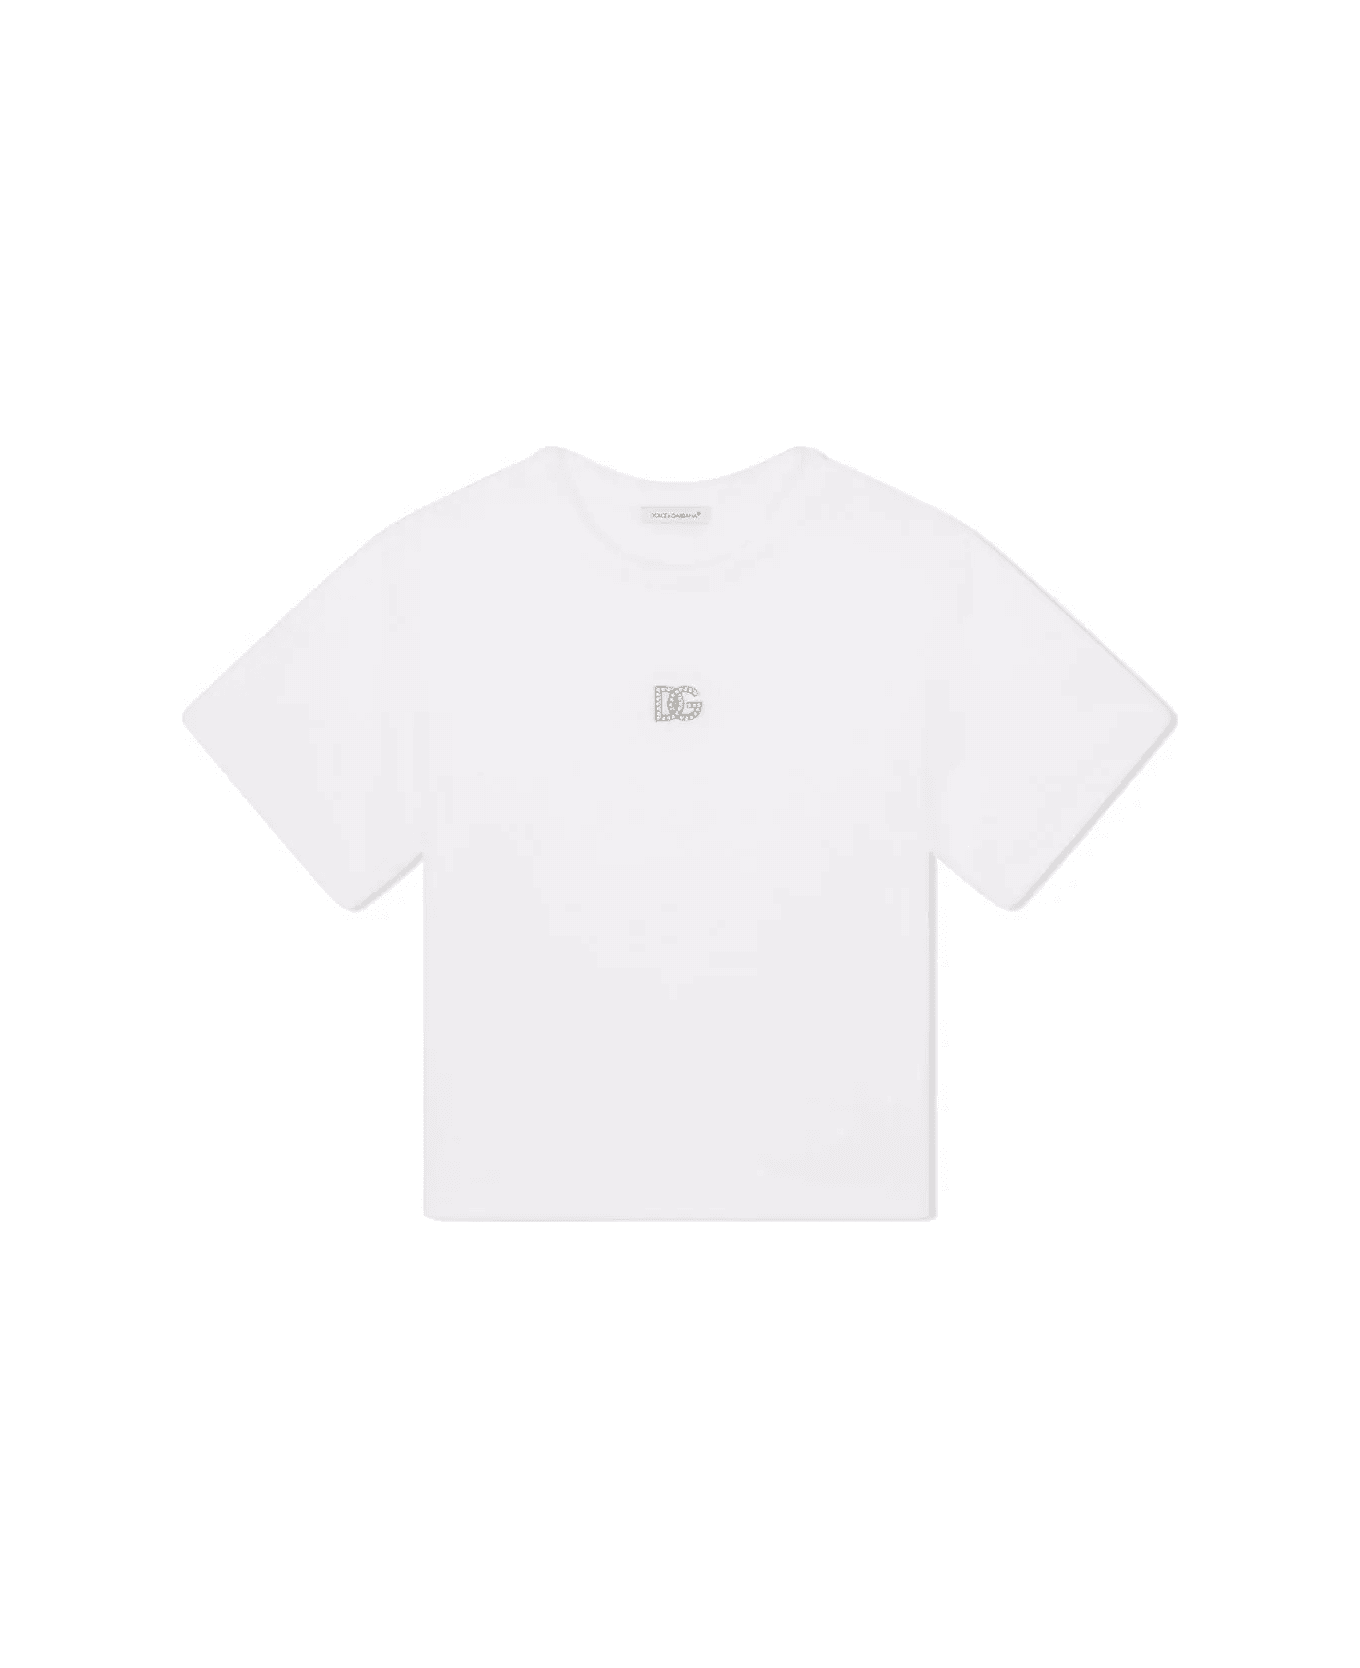 Dolce & Gabbana White T-shirt With Rhinestone Dg Logo - White